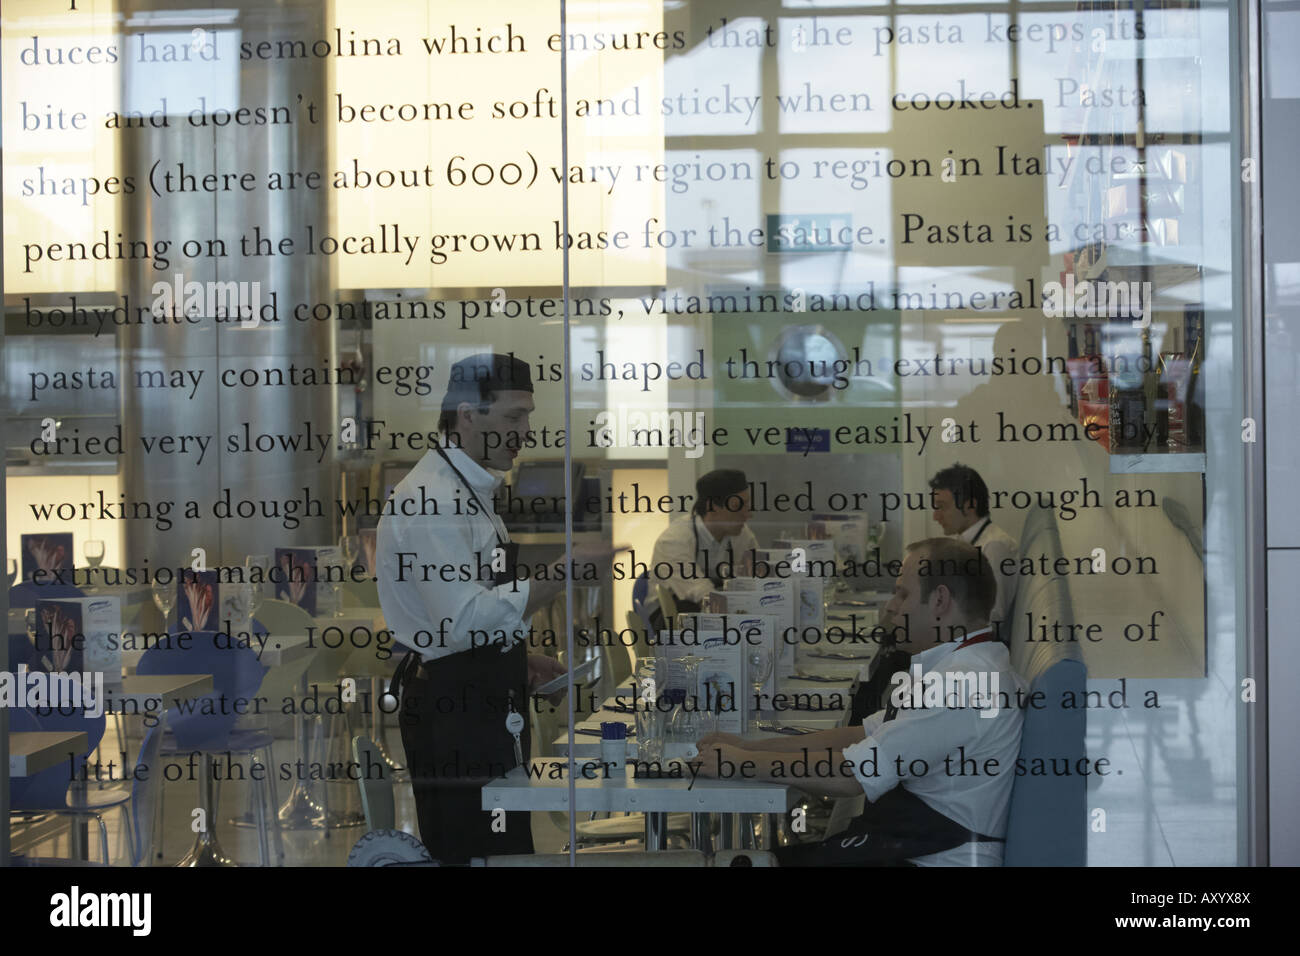 Waiters inside Carluccio's retail restaurant in landside Departures area of London Heathrow Airport's Terminal 5 building Stock Photo